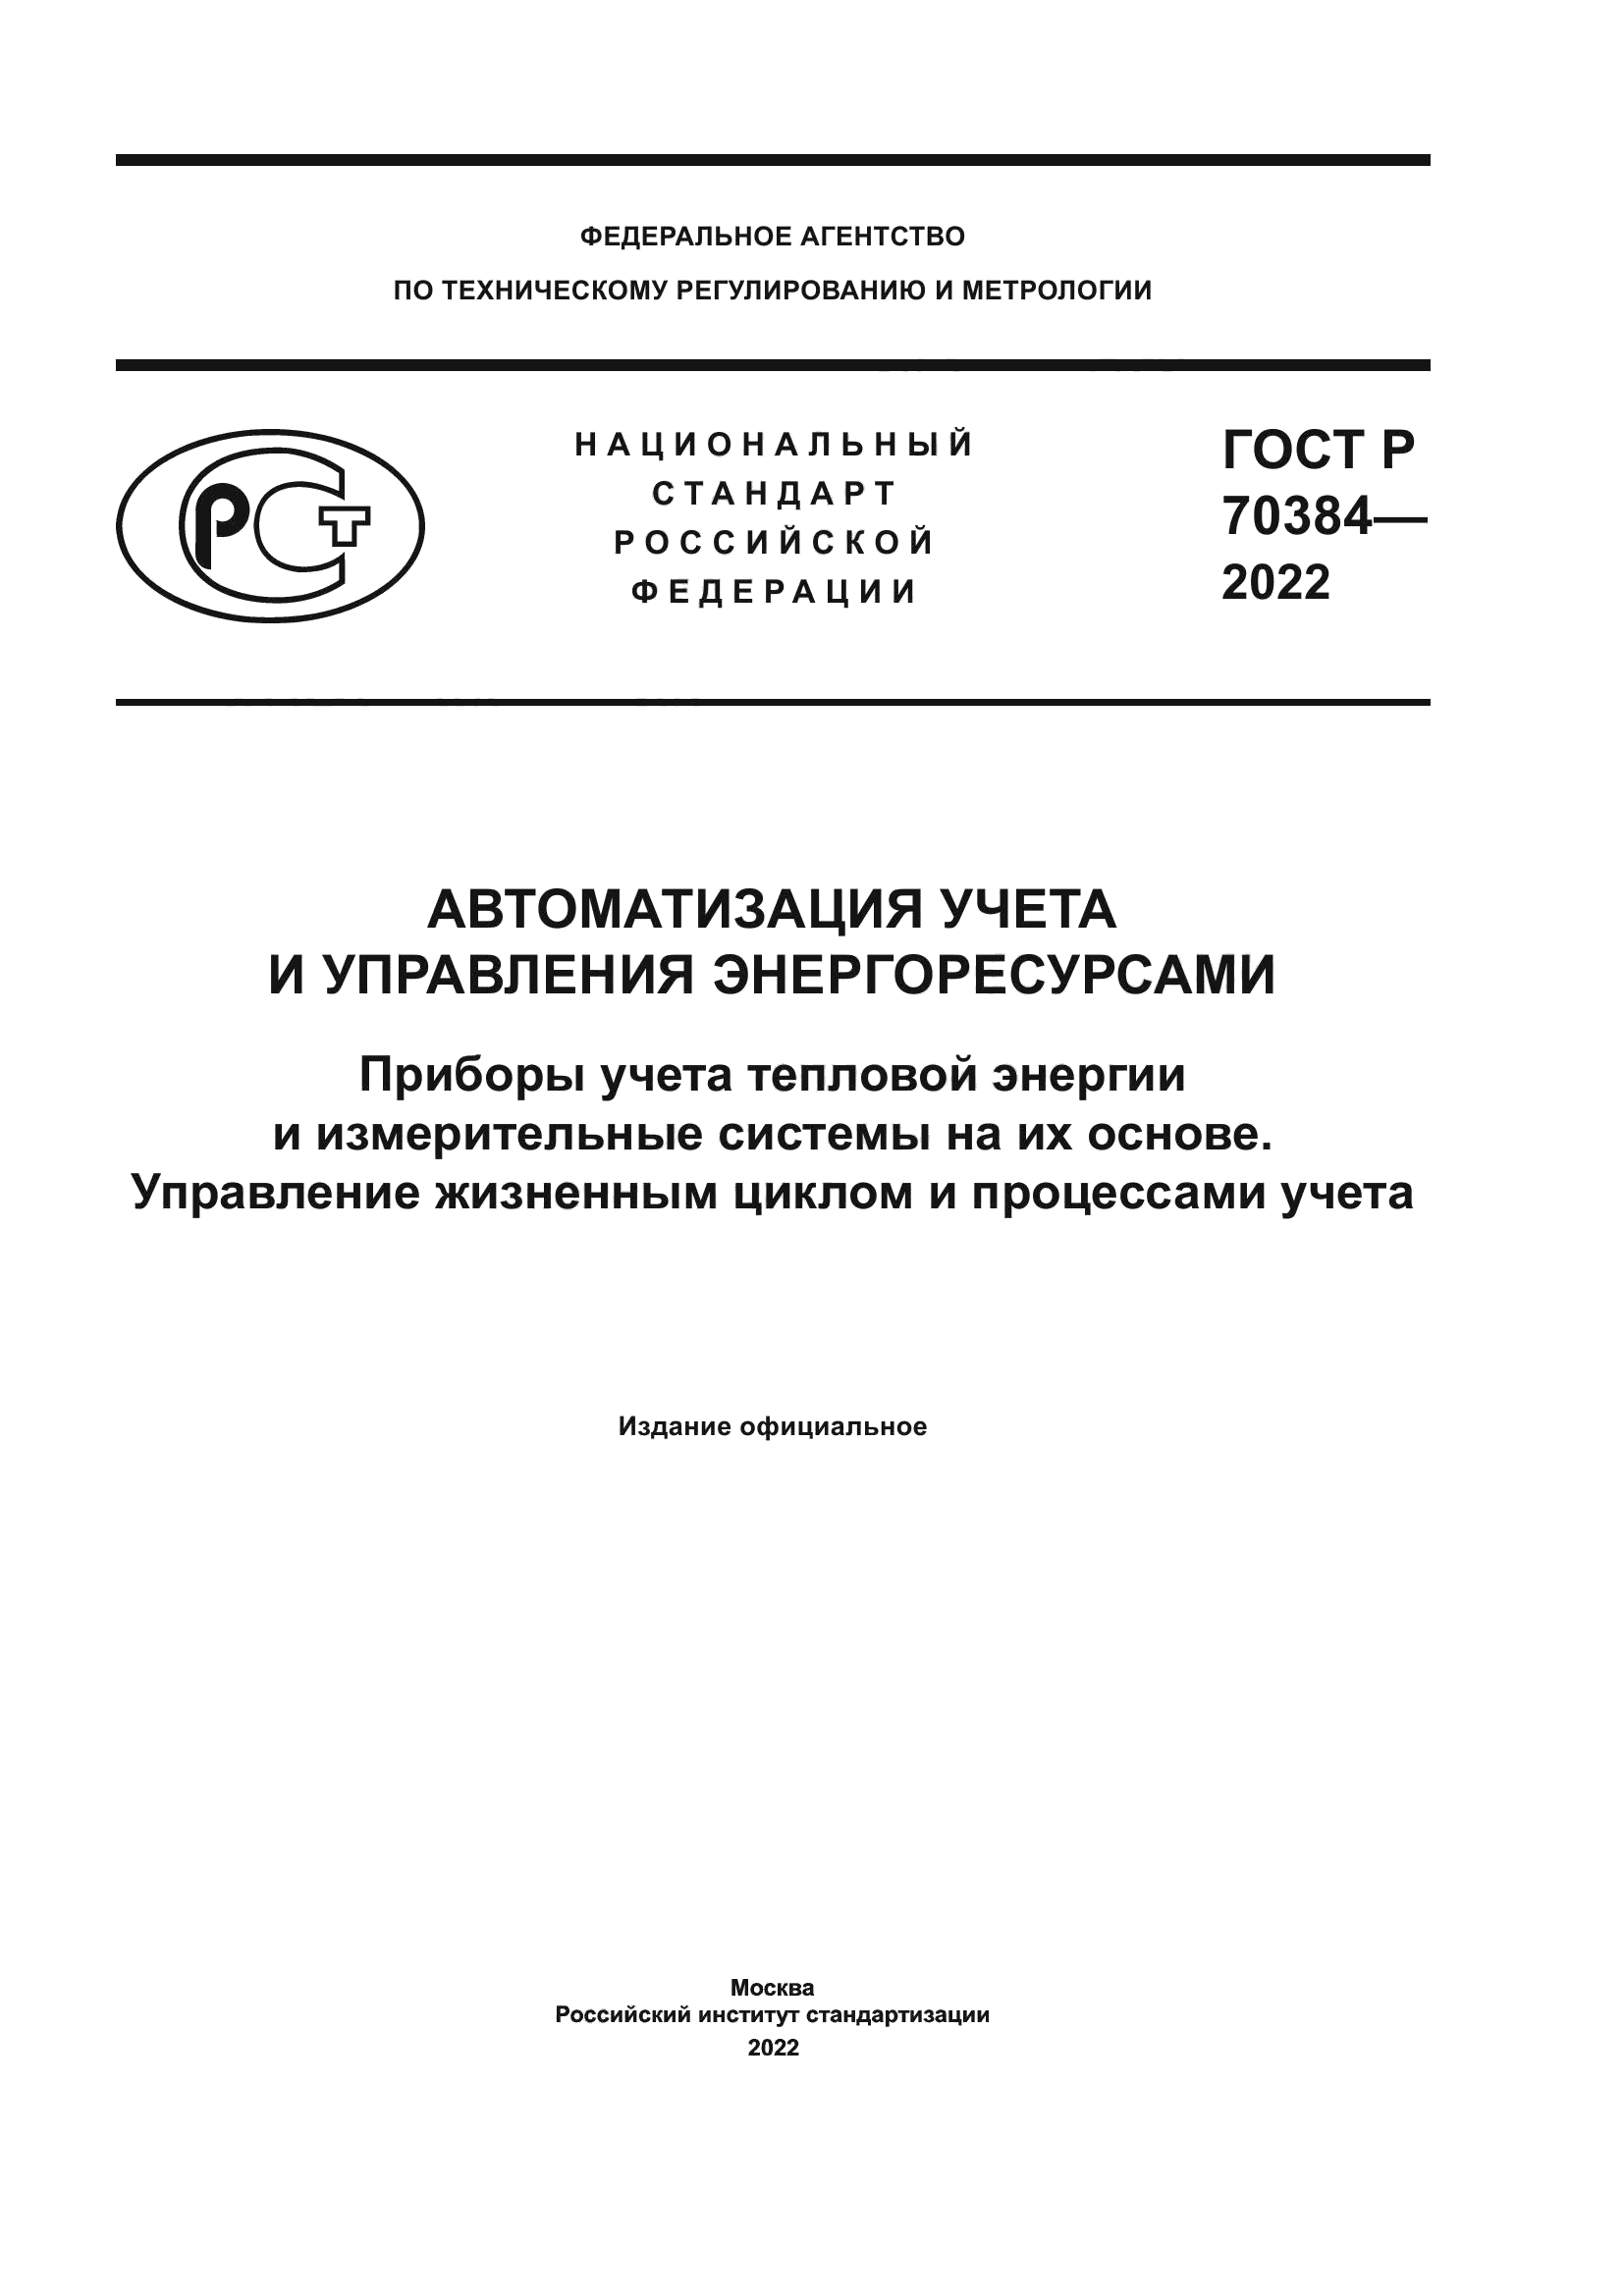 ГОСТ Р 70384-2022